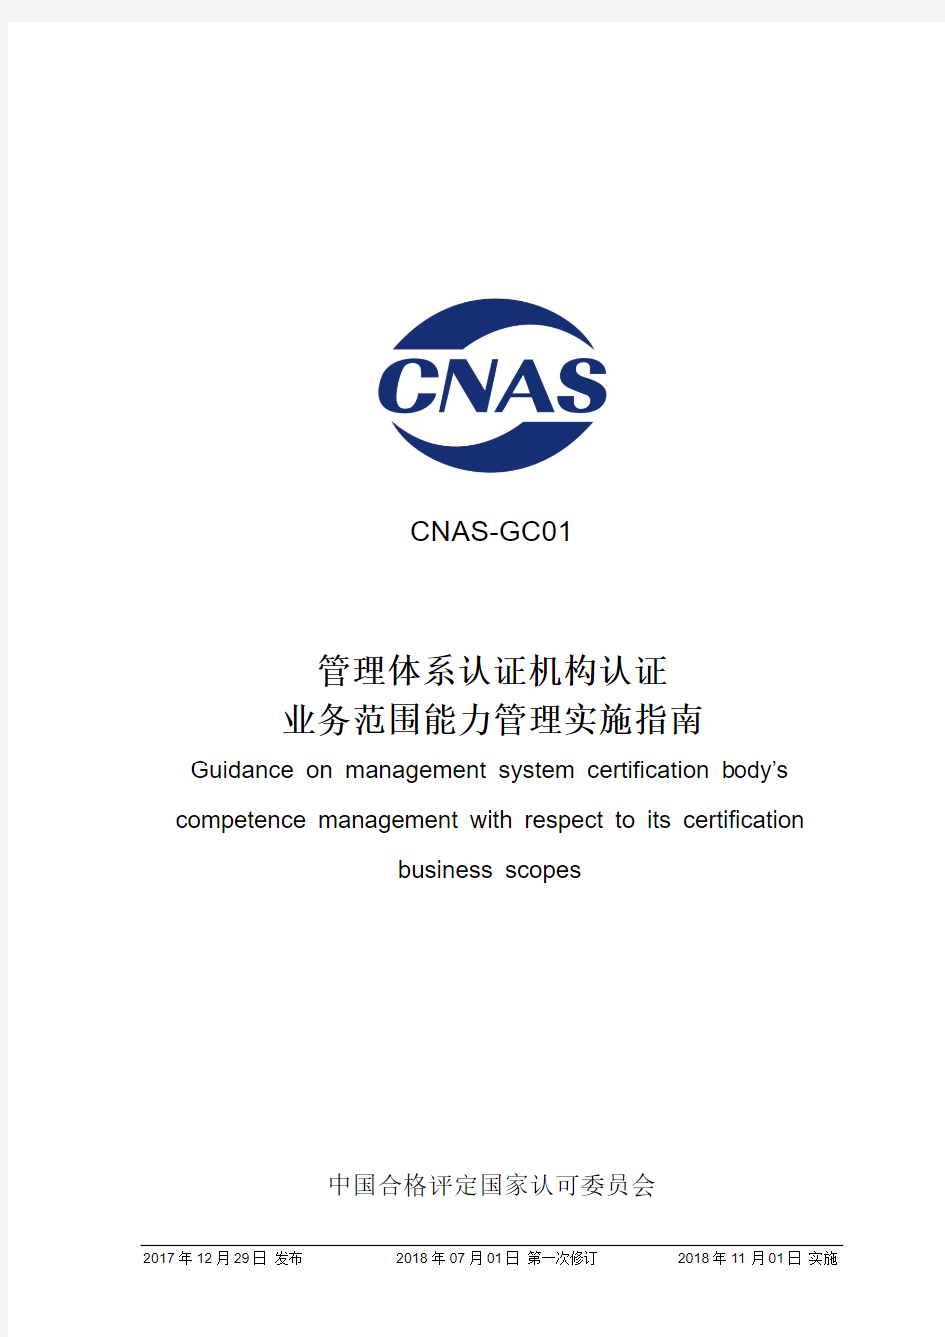 CNAS-GC01-2017管理体系认证机构认证业务范围能力管理实施指南